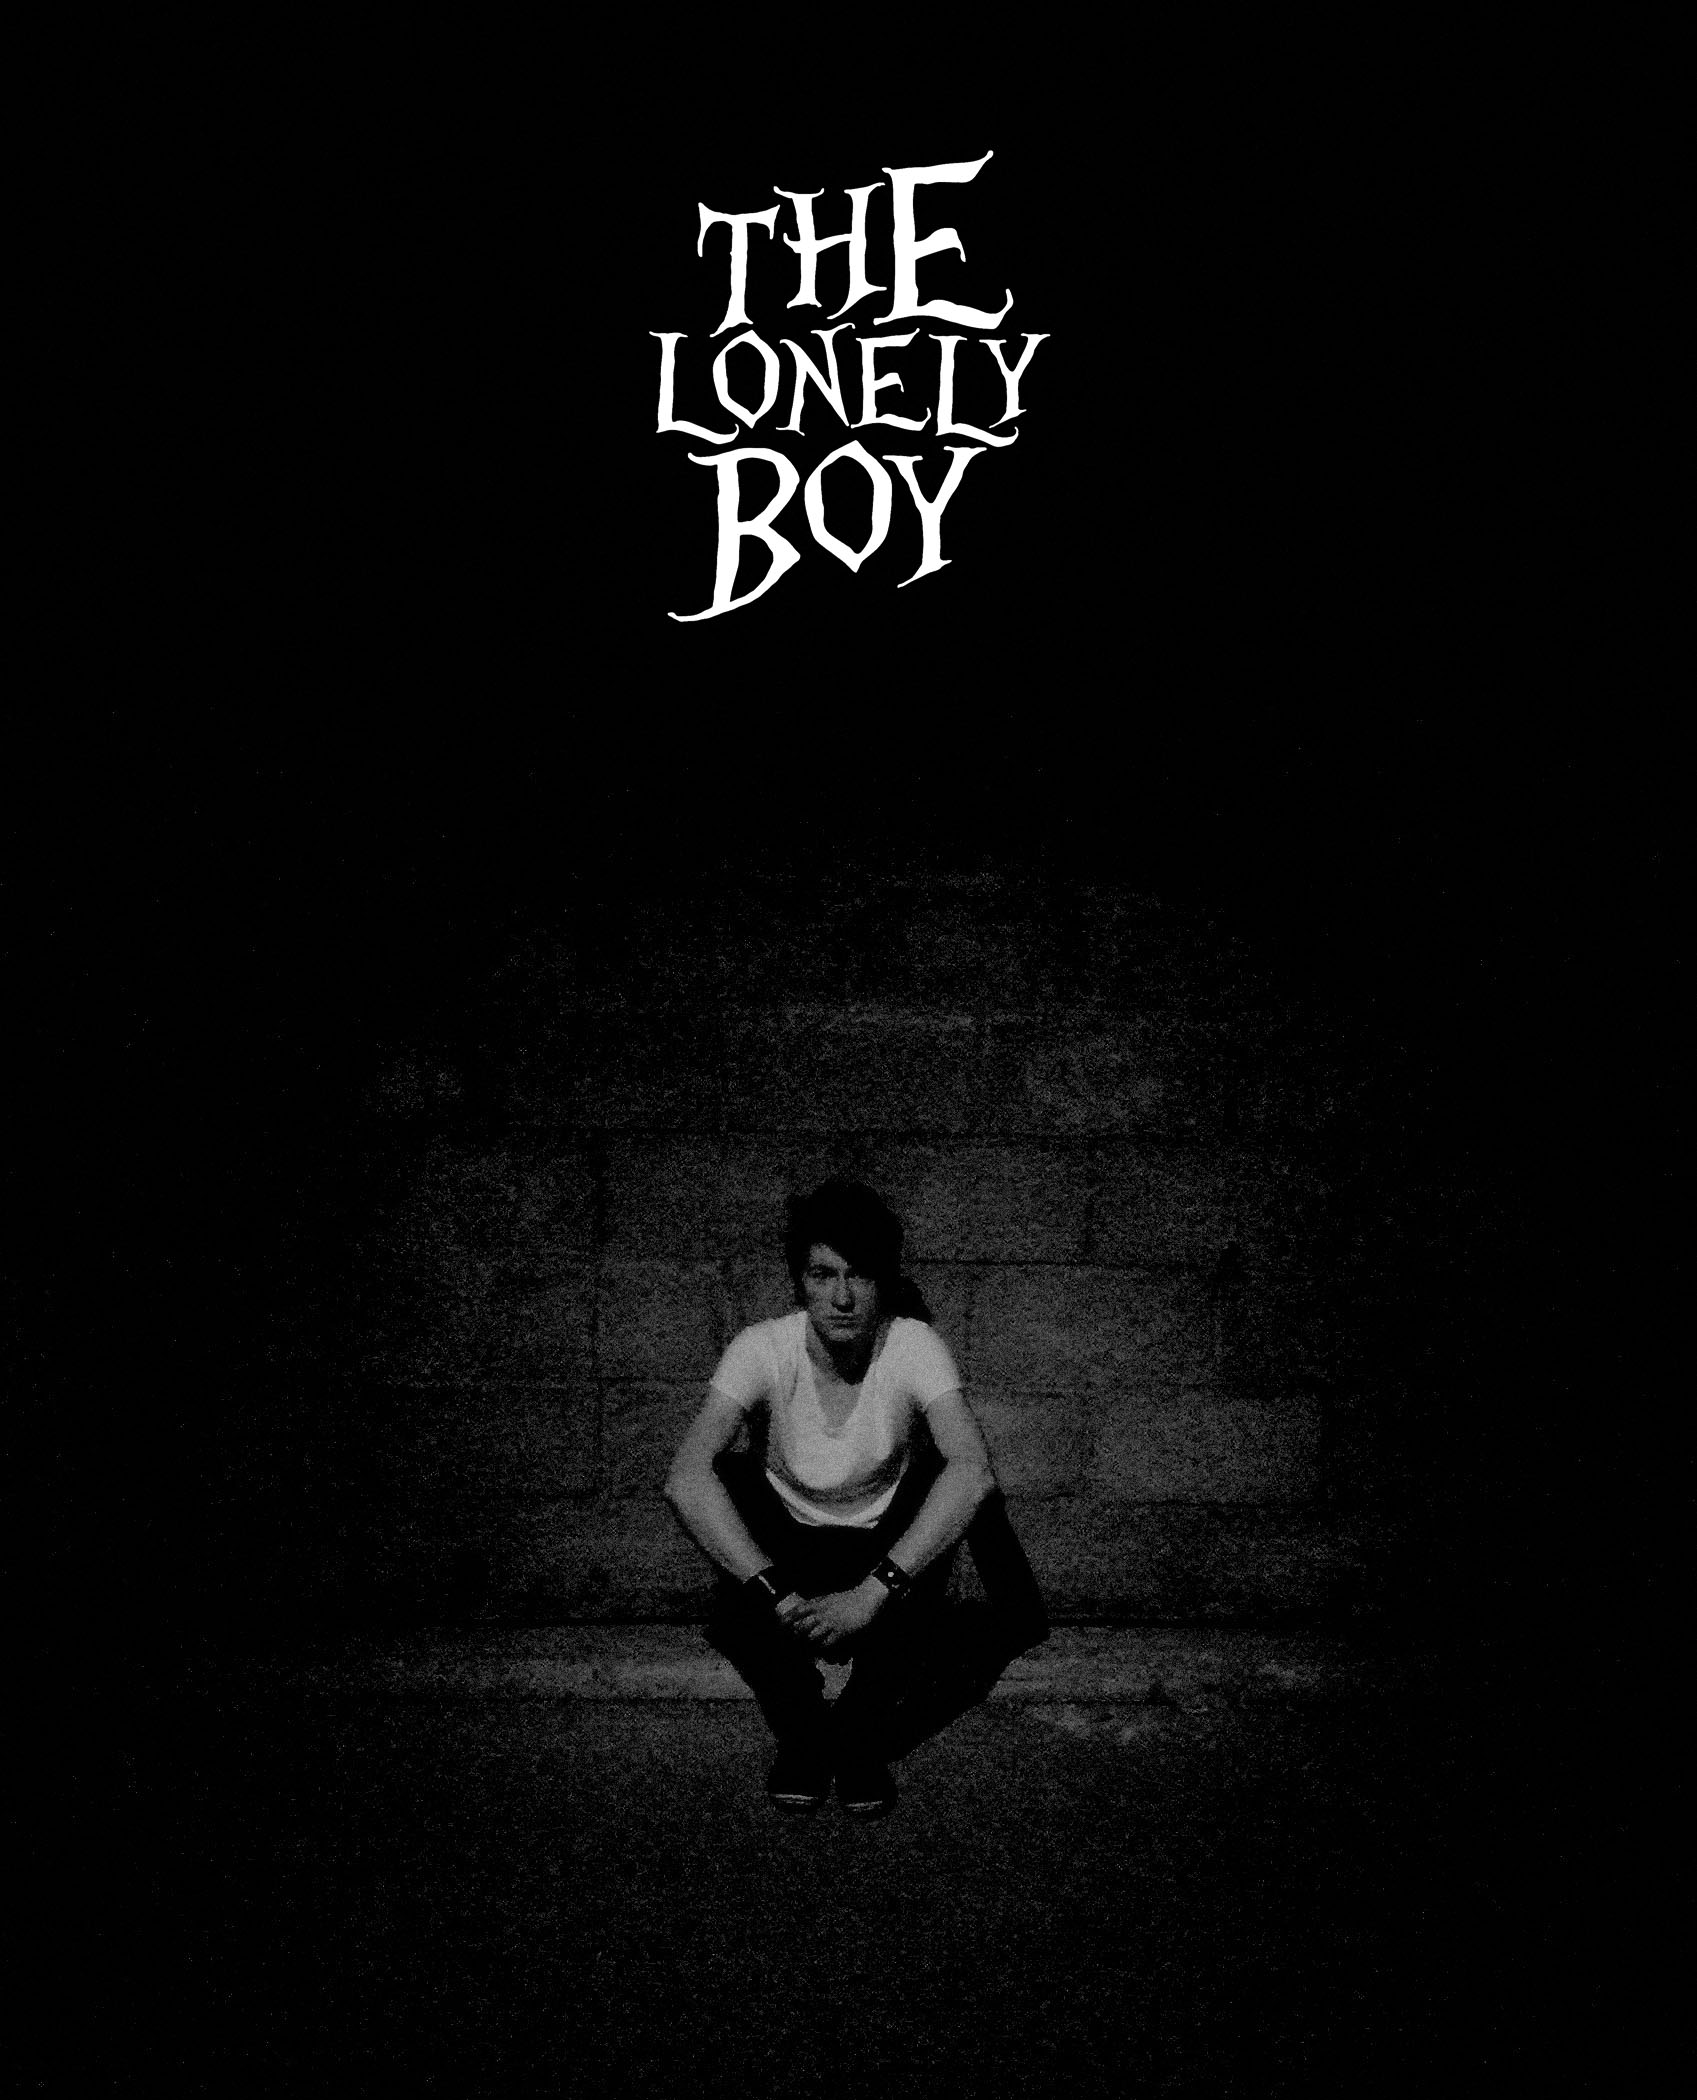 Txt lonely. Лонли Бойз Лонли. Lonely boy txt обложка. Lonely boy the Avenger. Txt Lonely boy транскрипция.